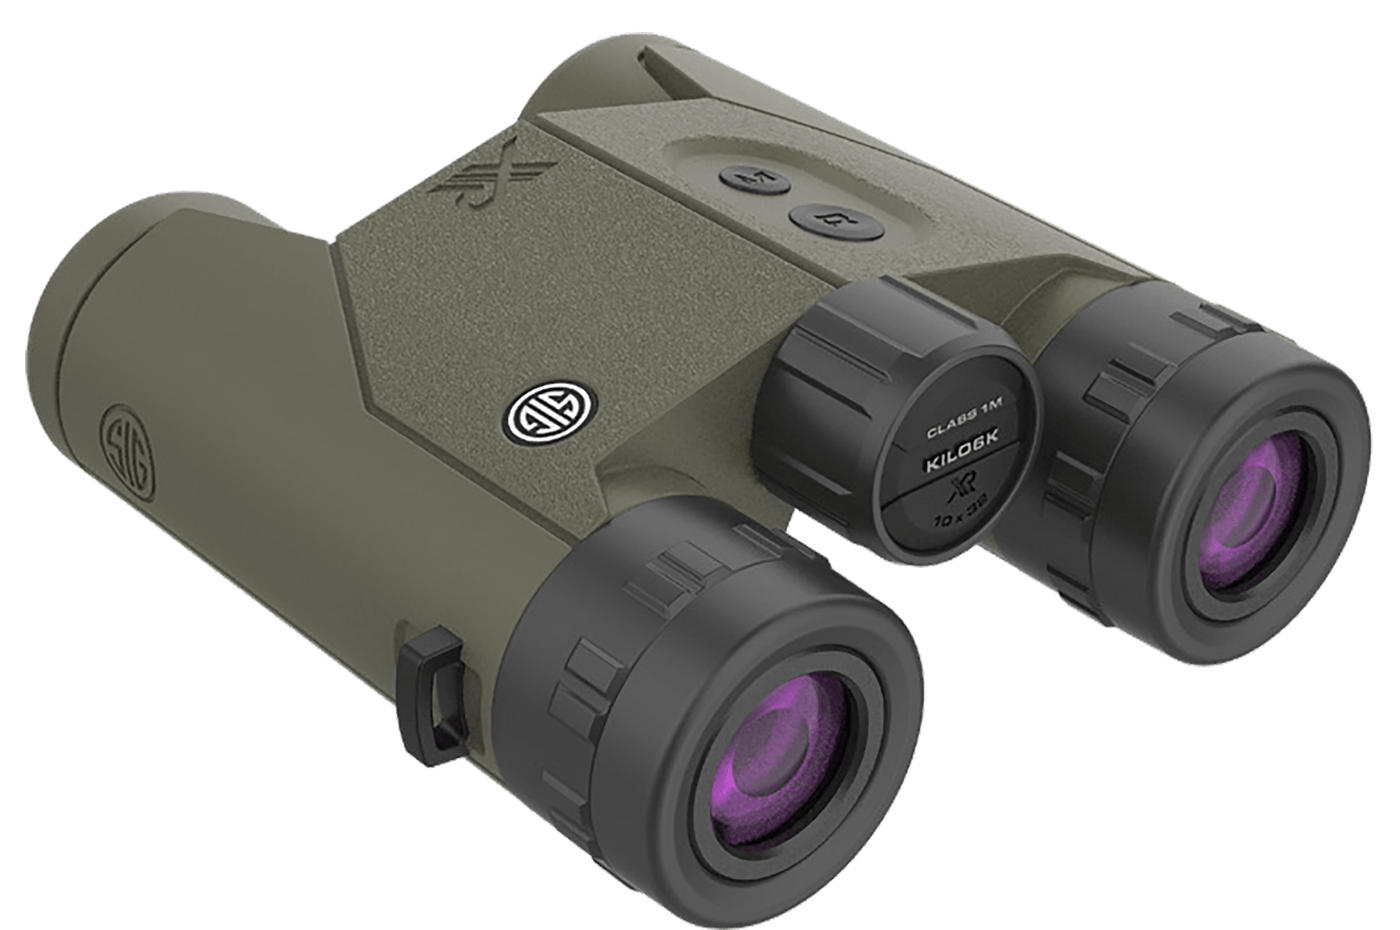 Sig Sauer Electro-Optics Sig Sauer Kilo6k Hd Rangefinding Binoculars 10x32mm Bdx Green Optics